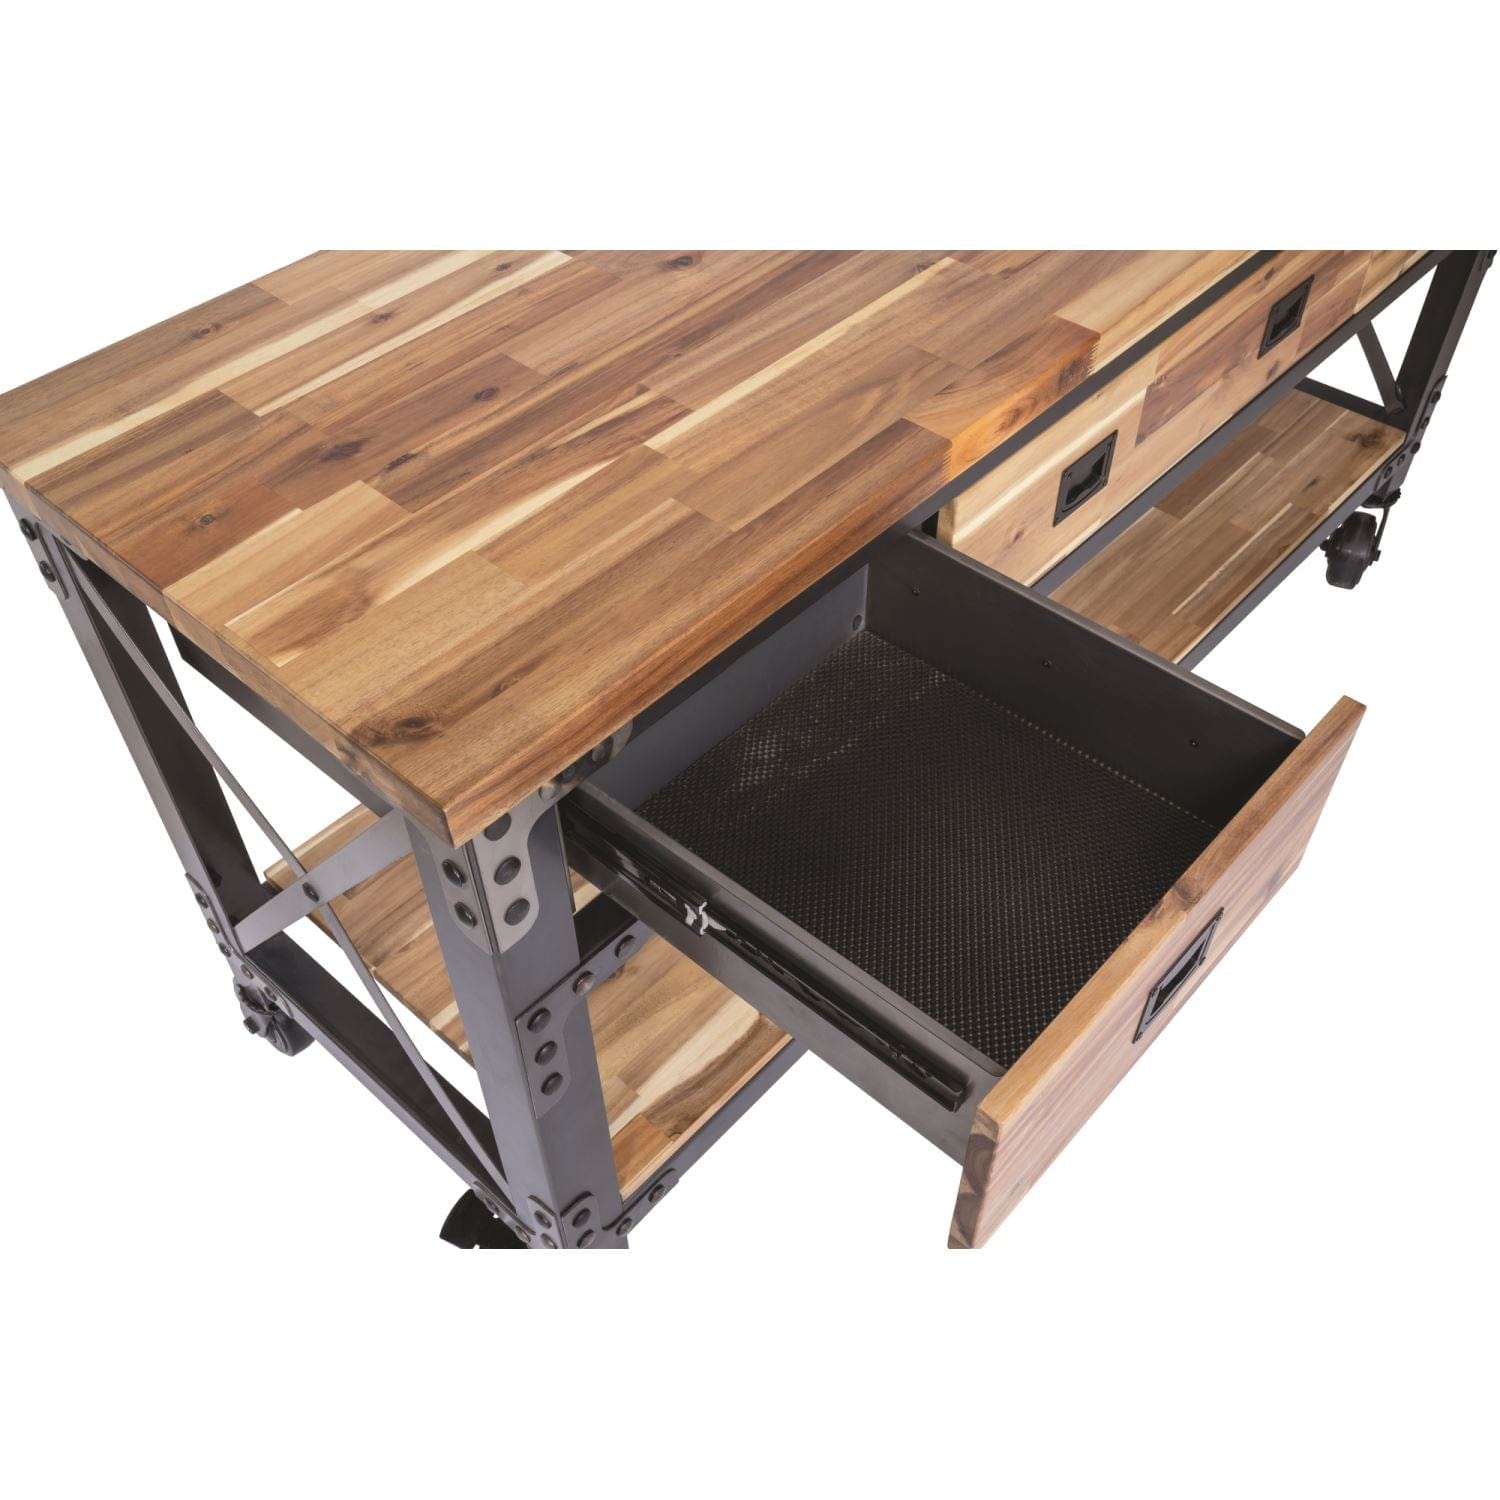 Duramax Furnitures DuraMax | Darby 72" Industrial Metal & Wood Kitchen Island Desk With Drawers 68051